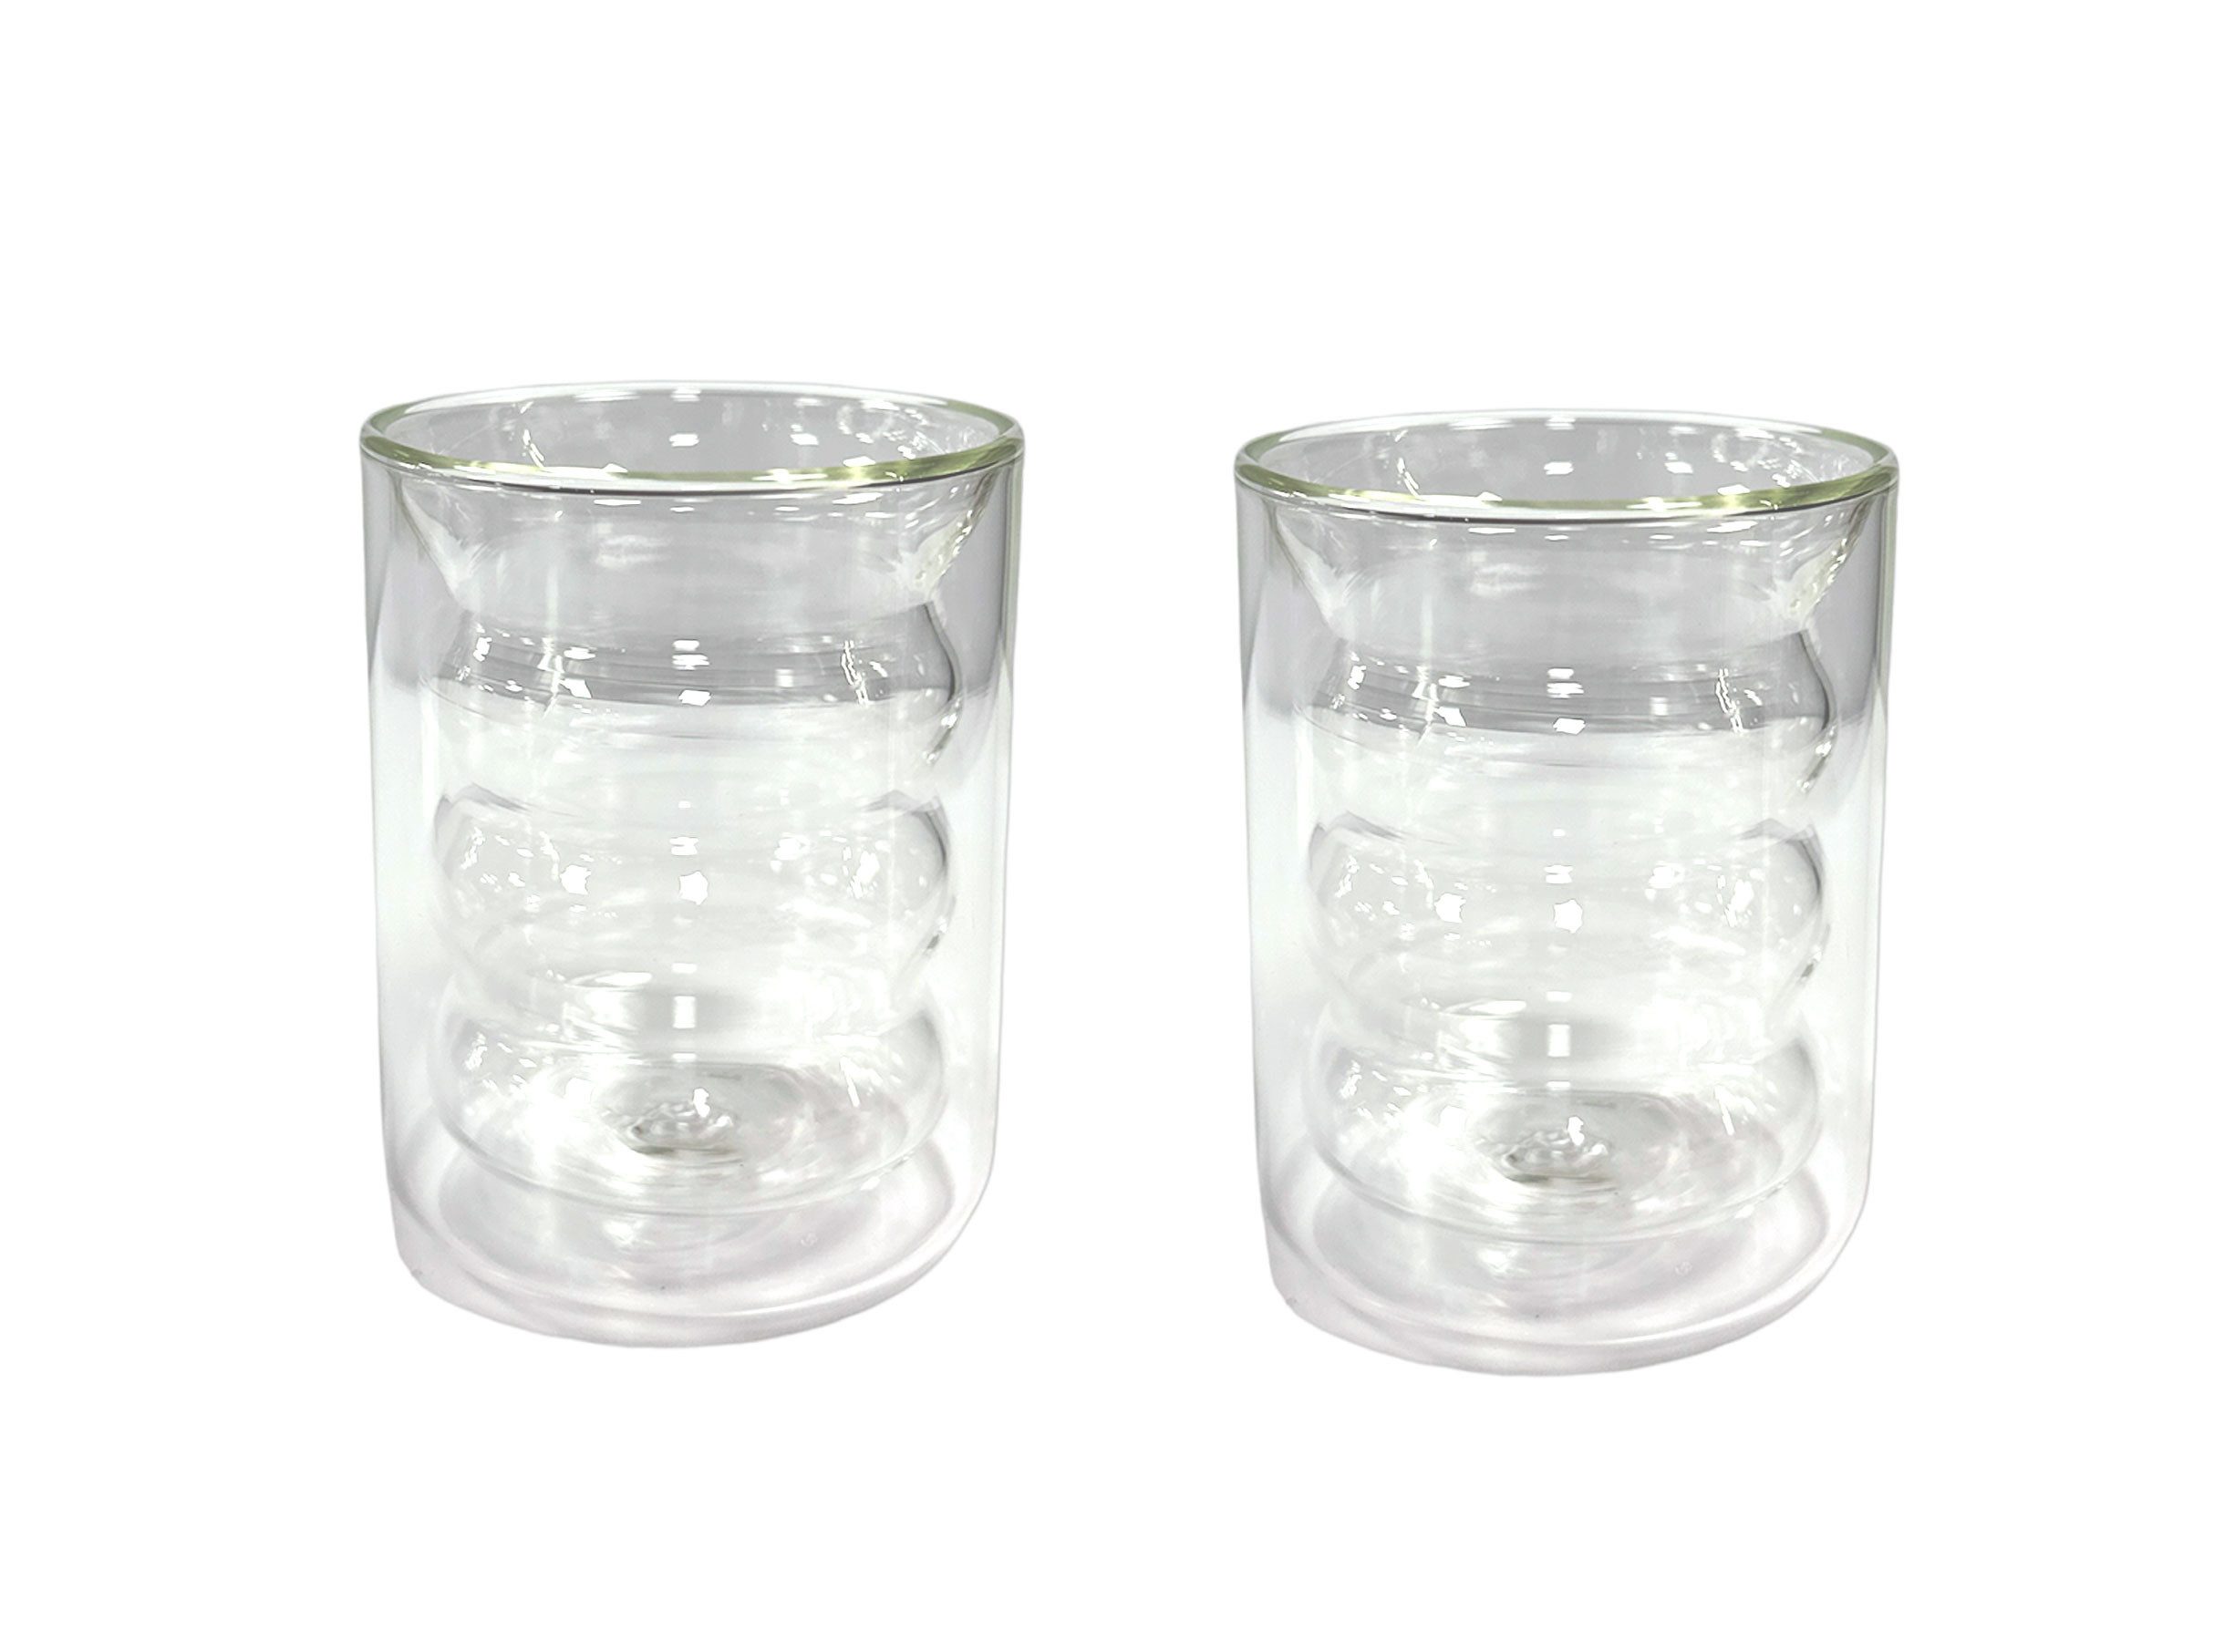 Mulex Gläser-Set Mulex-welle, Glas, wellenförmige 2-teiligen Tee Kaffee Wasserbecher